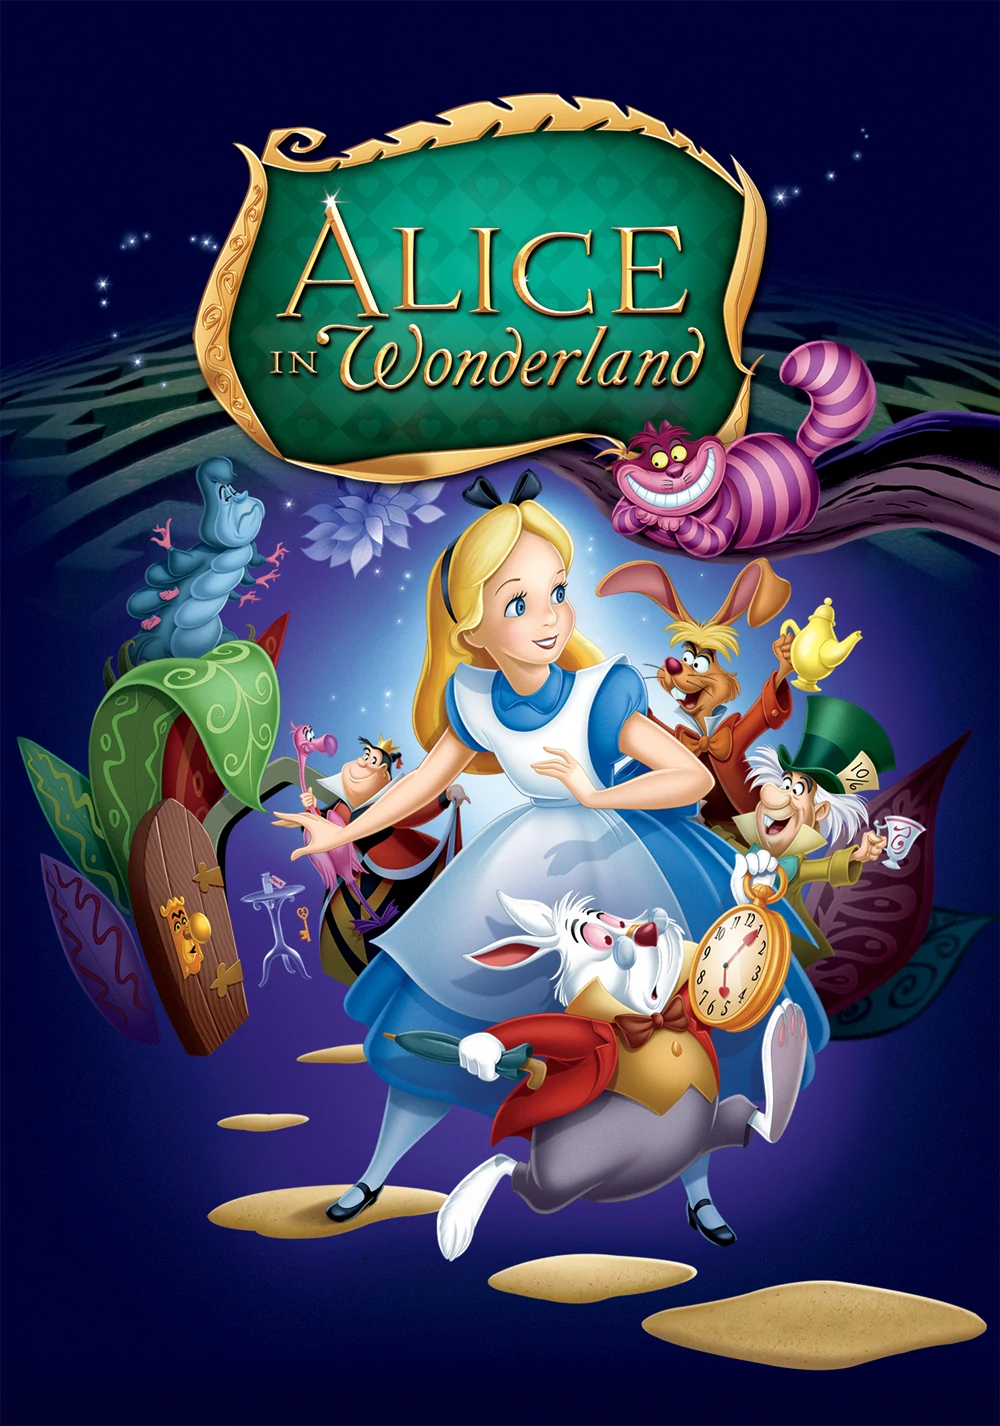 The Red King, Alice in Wonderland Wiki